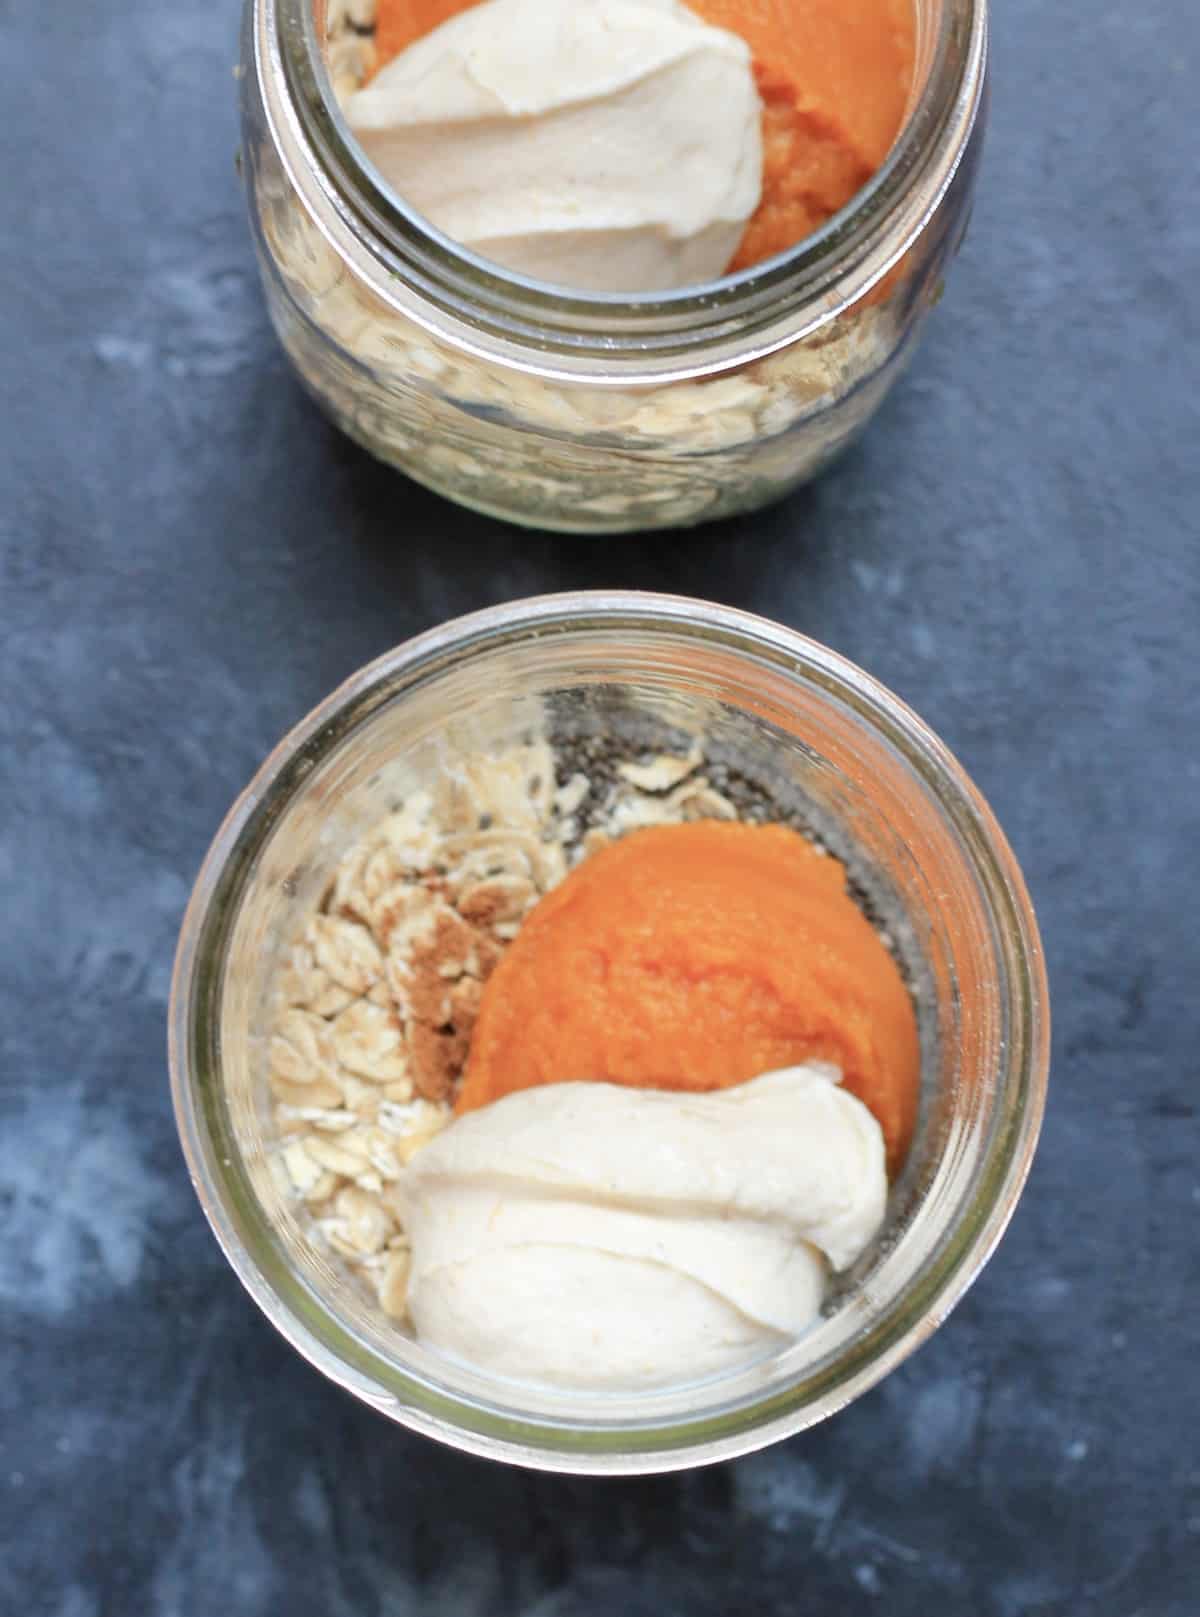 pumpkin puree and greek yogurt on top of the oats